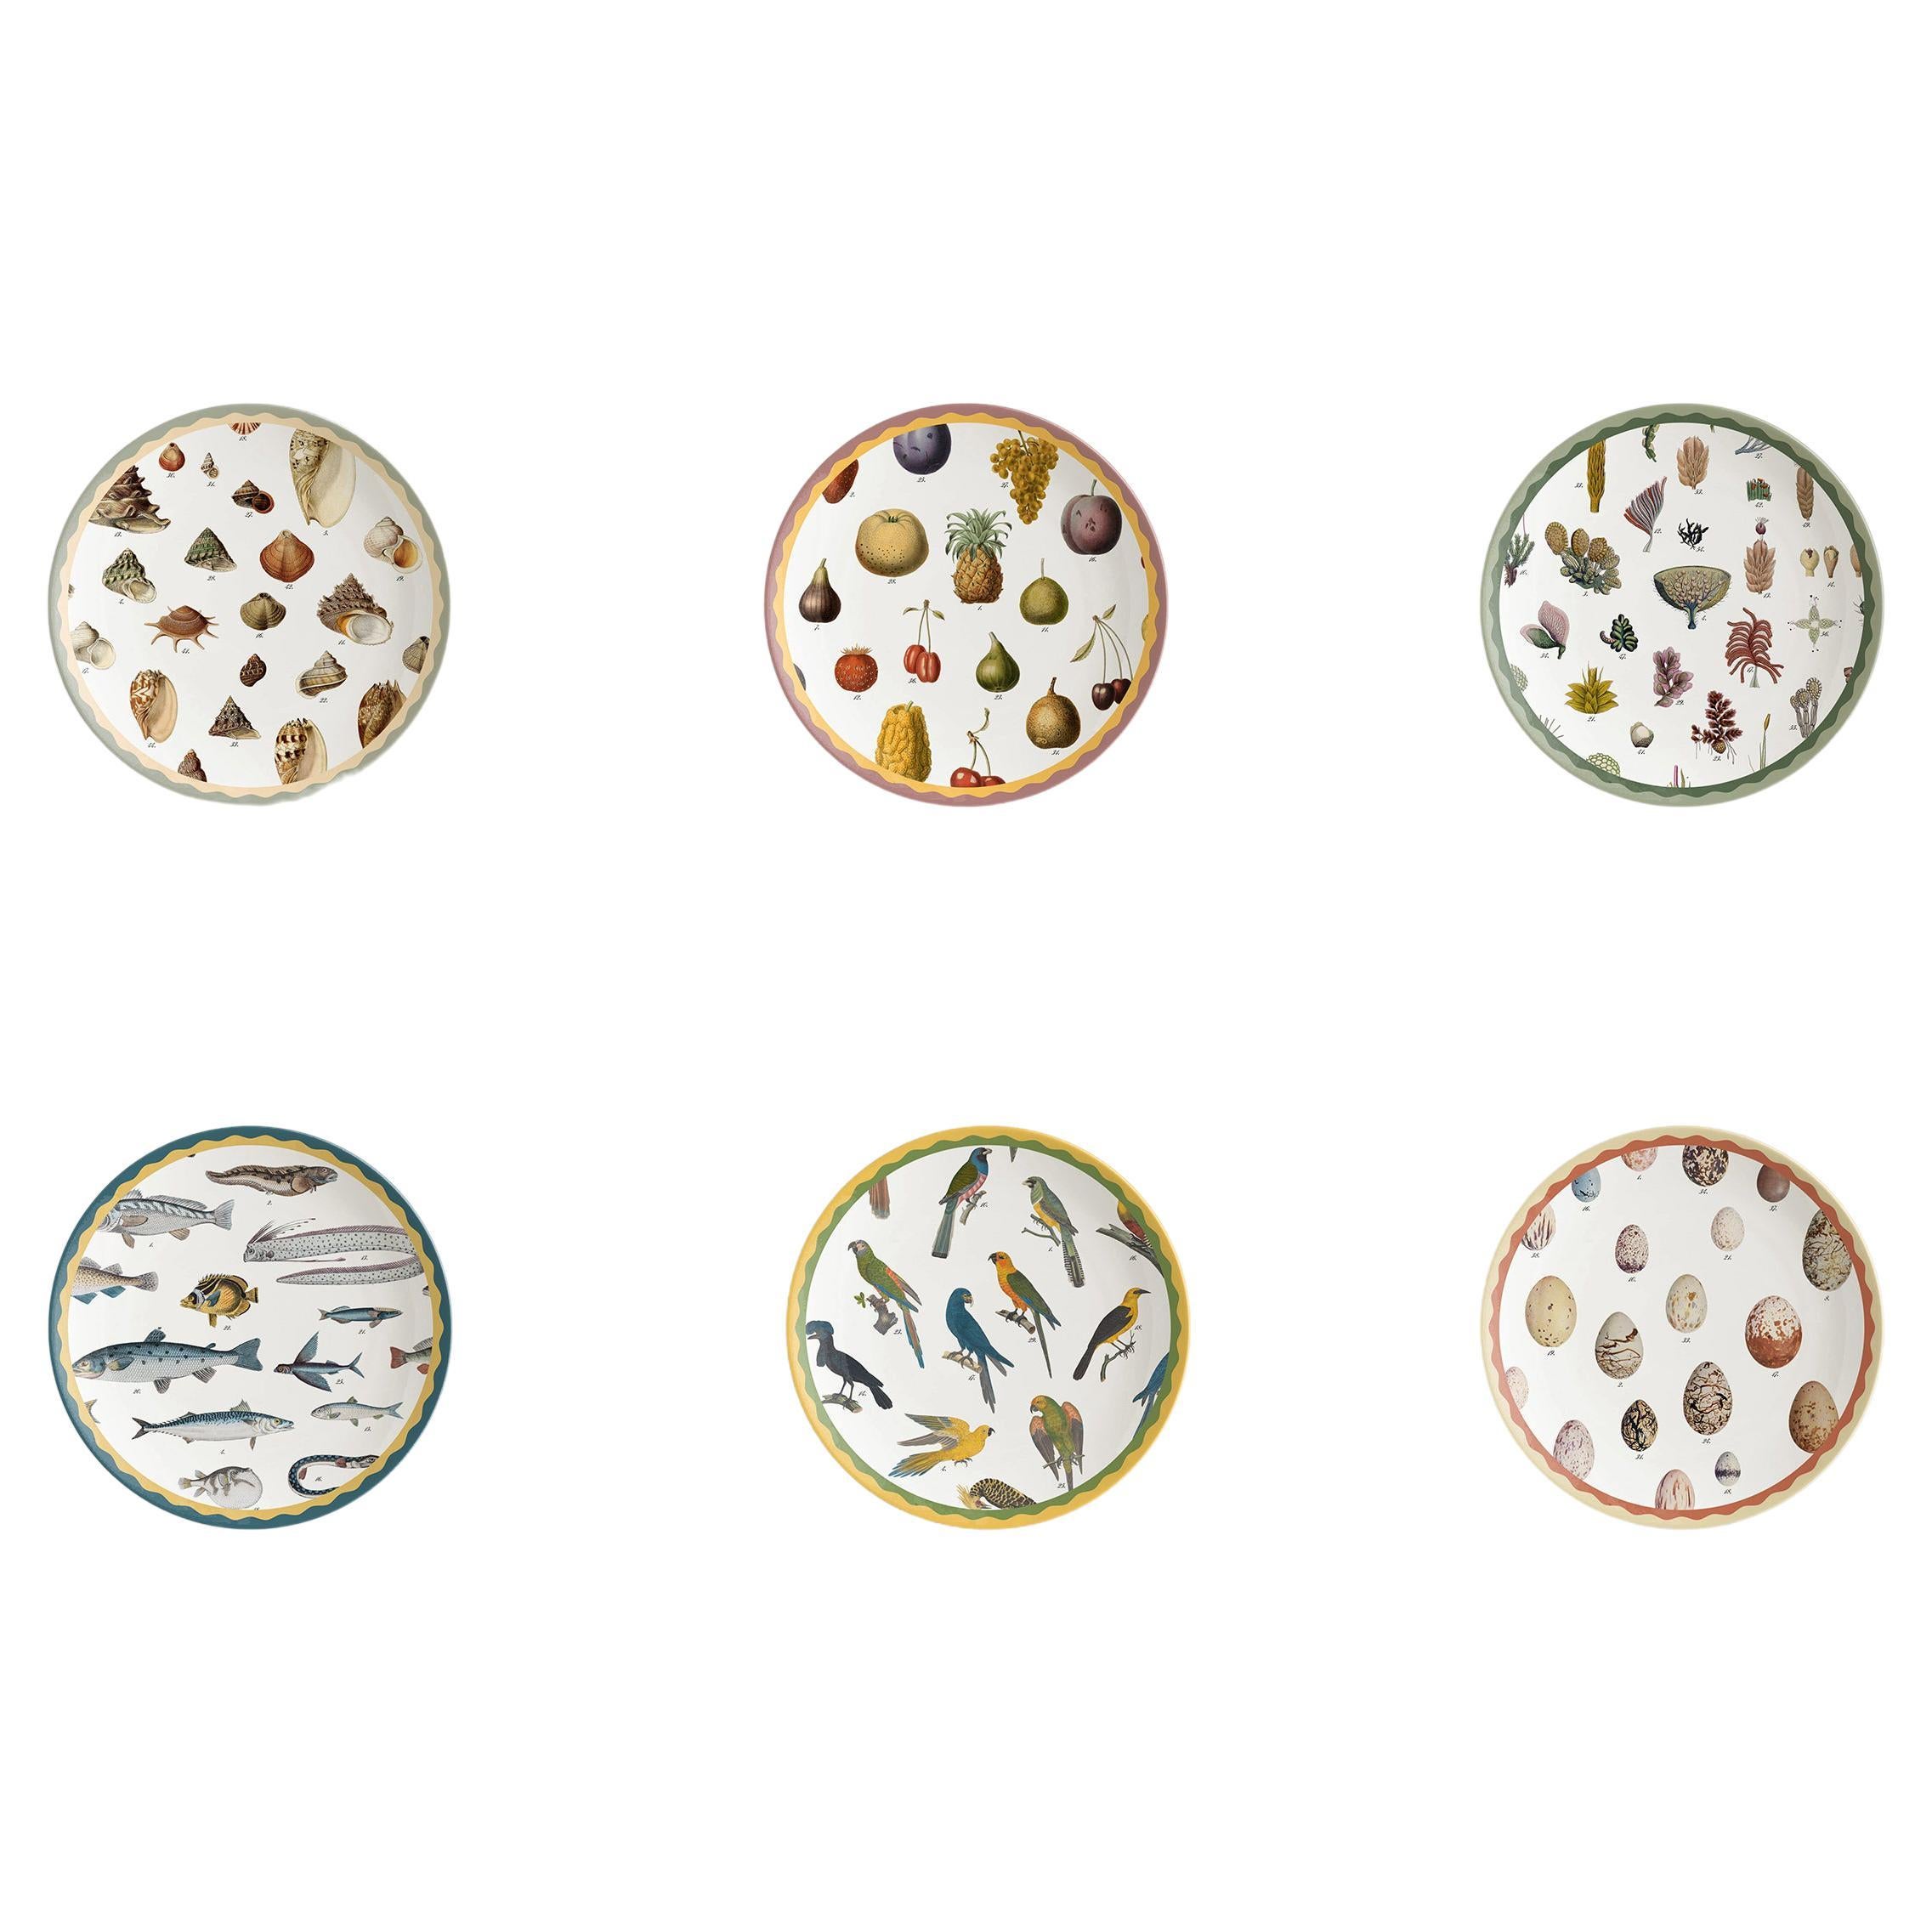 Cabinet de Curiosités, Six Contemporary Decorated Porcelain Dessert Plates